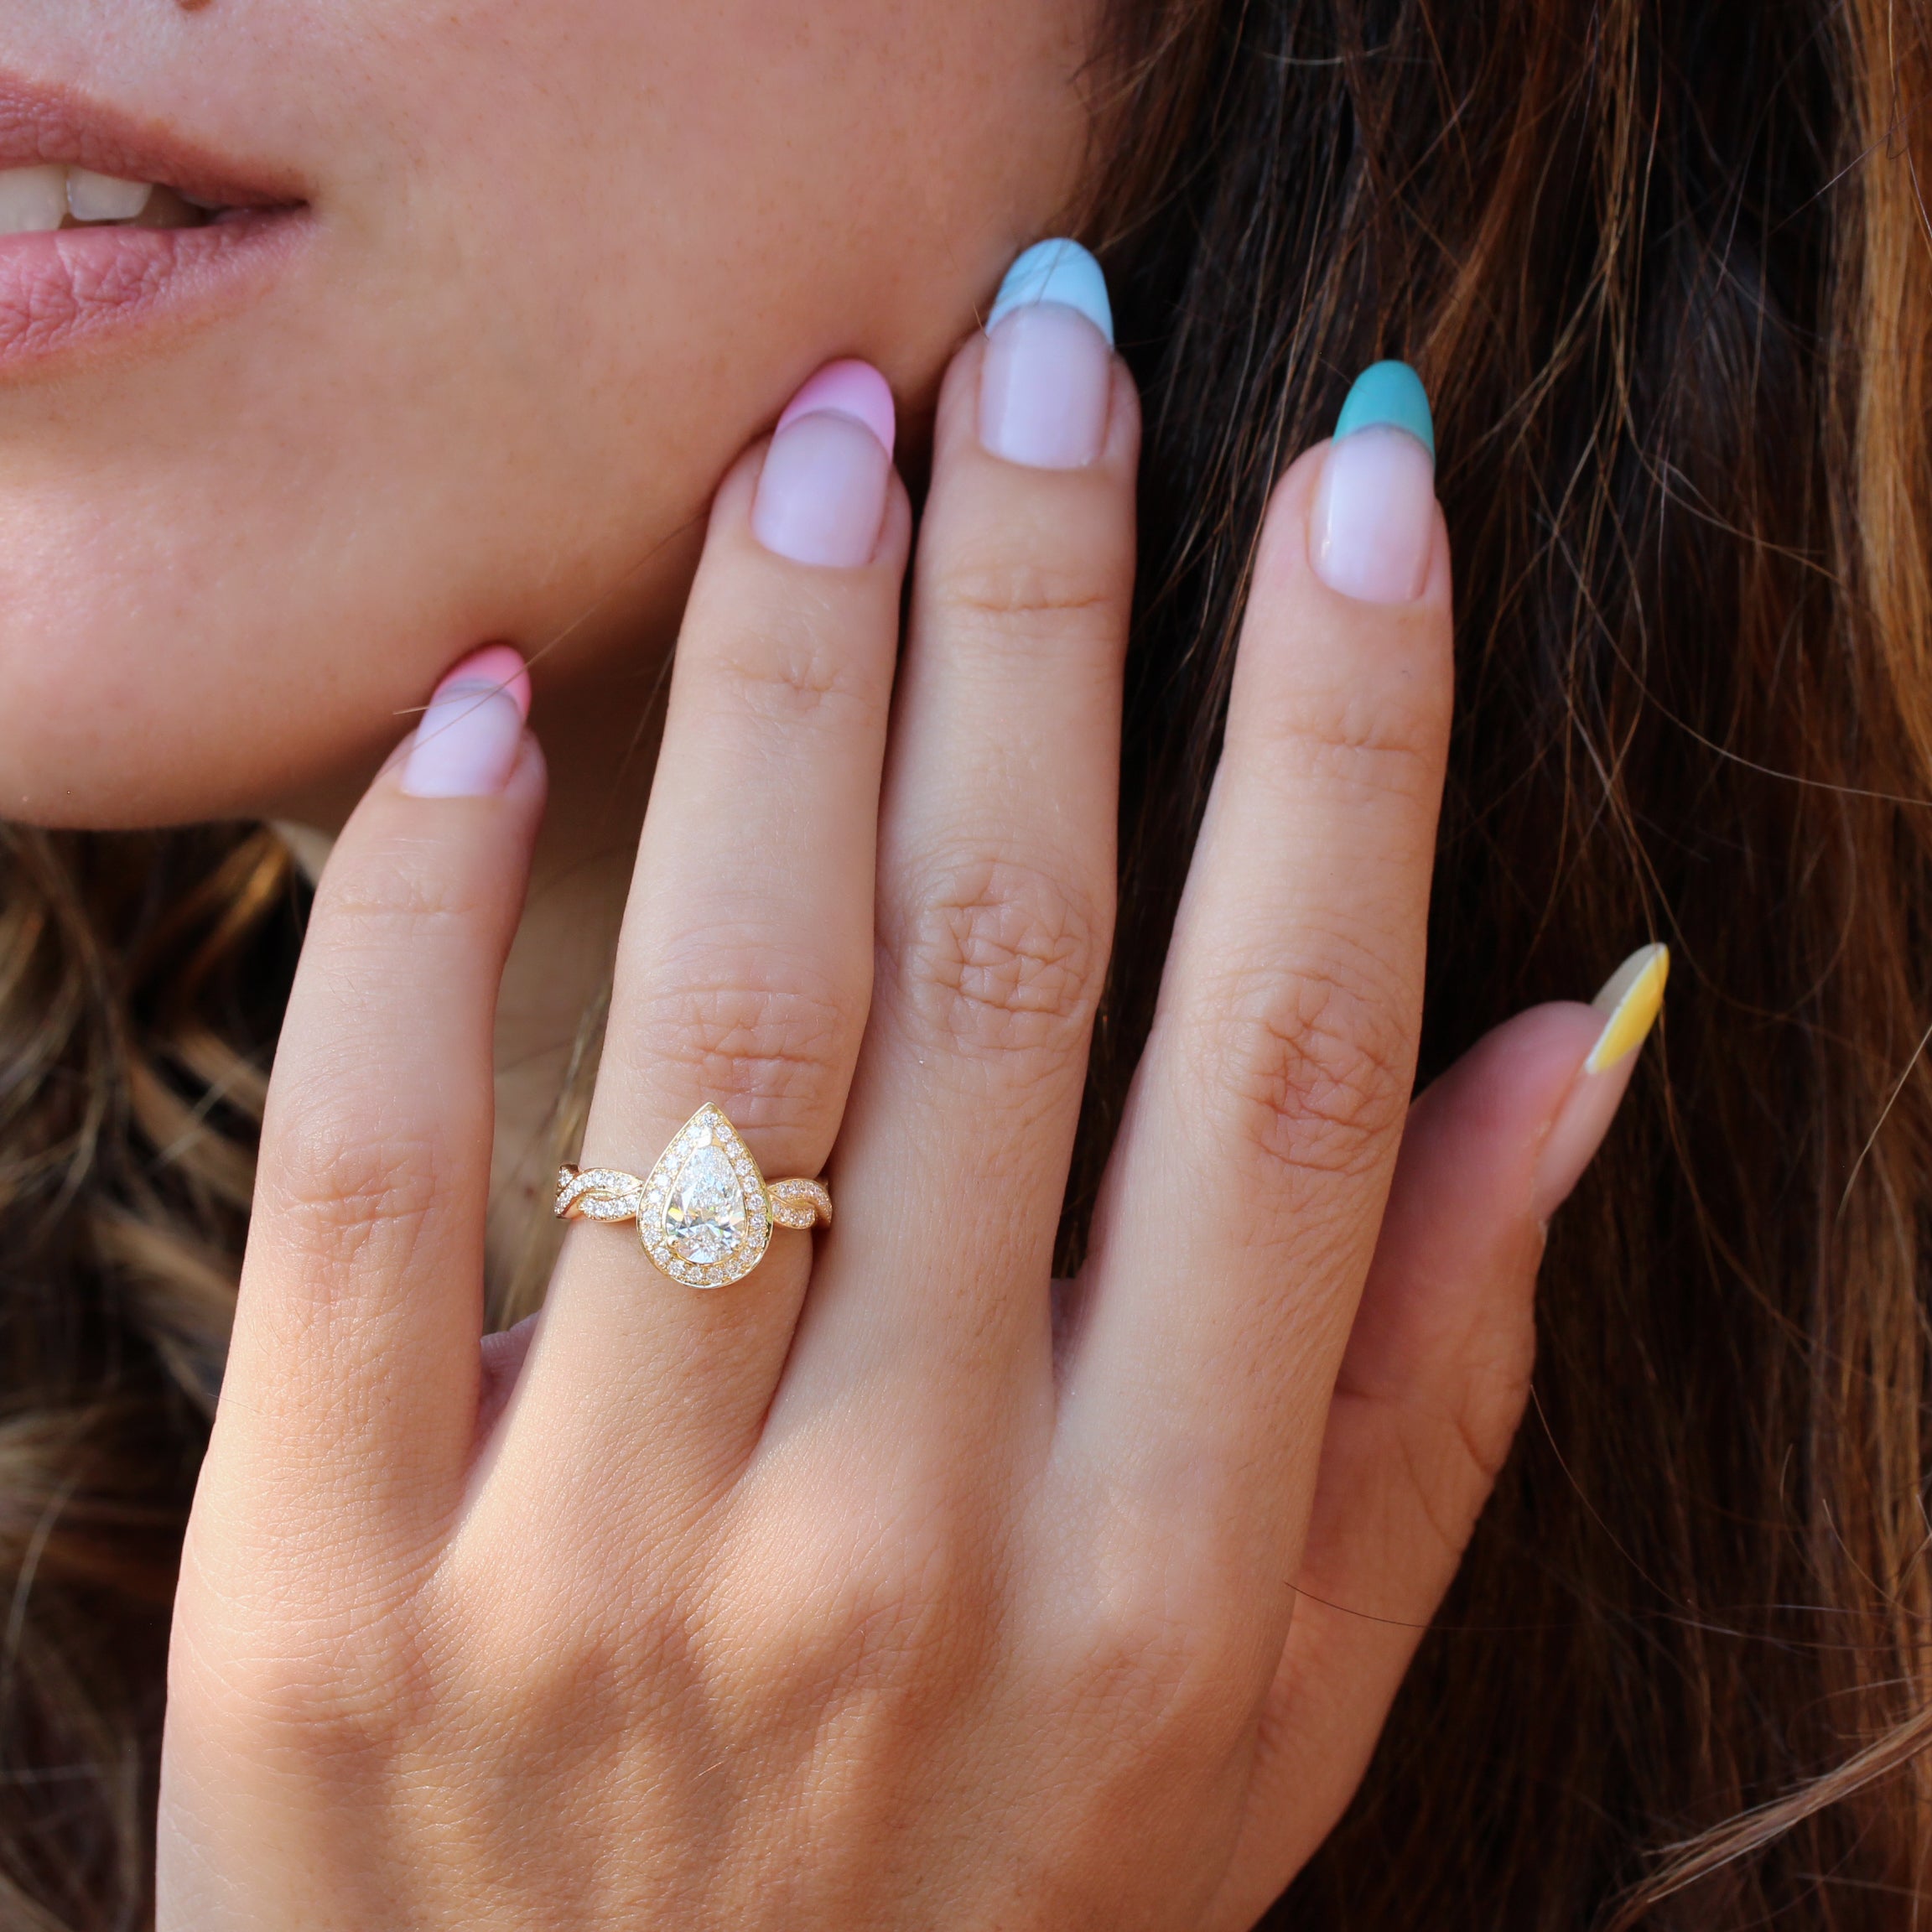 1 carat Pear diamond engagement ring - "Zeus" ♥